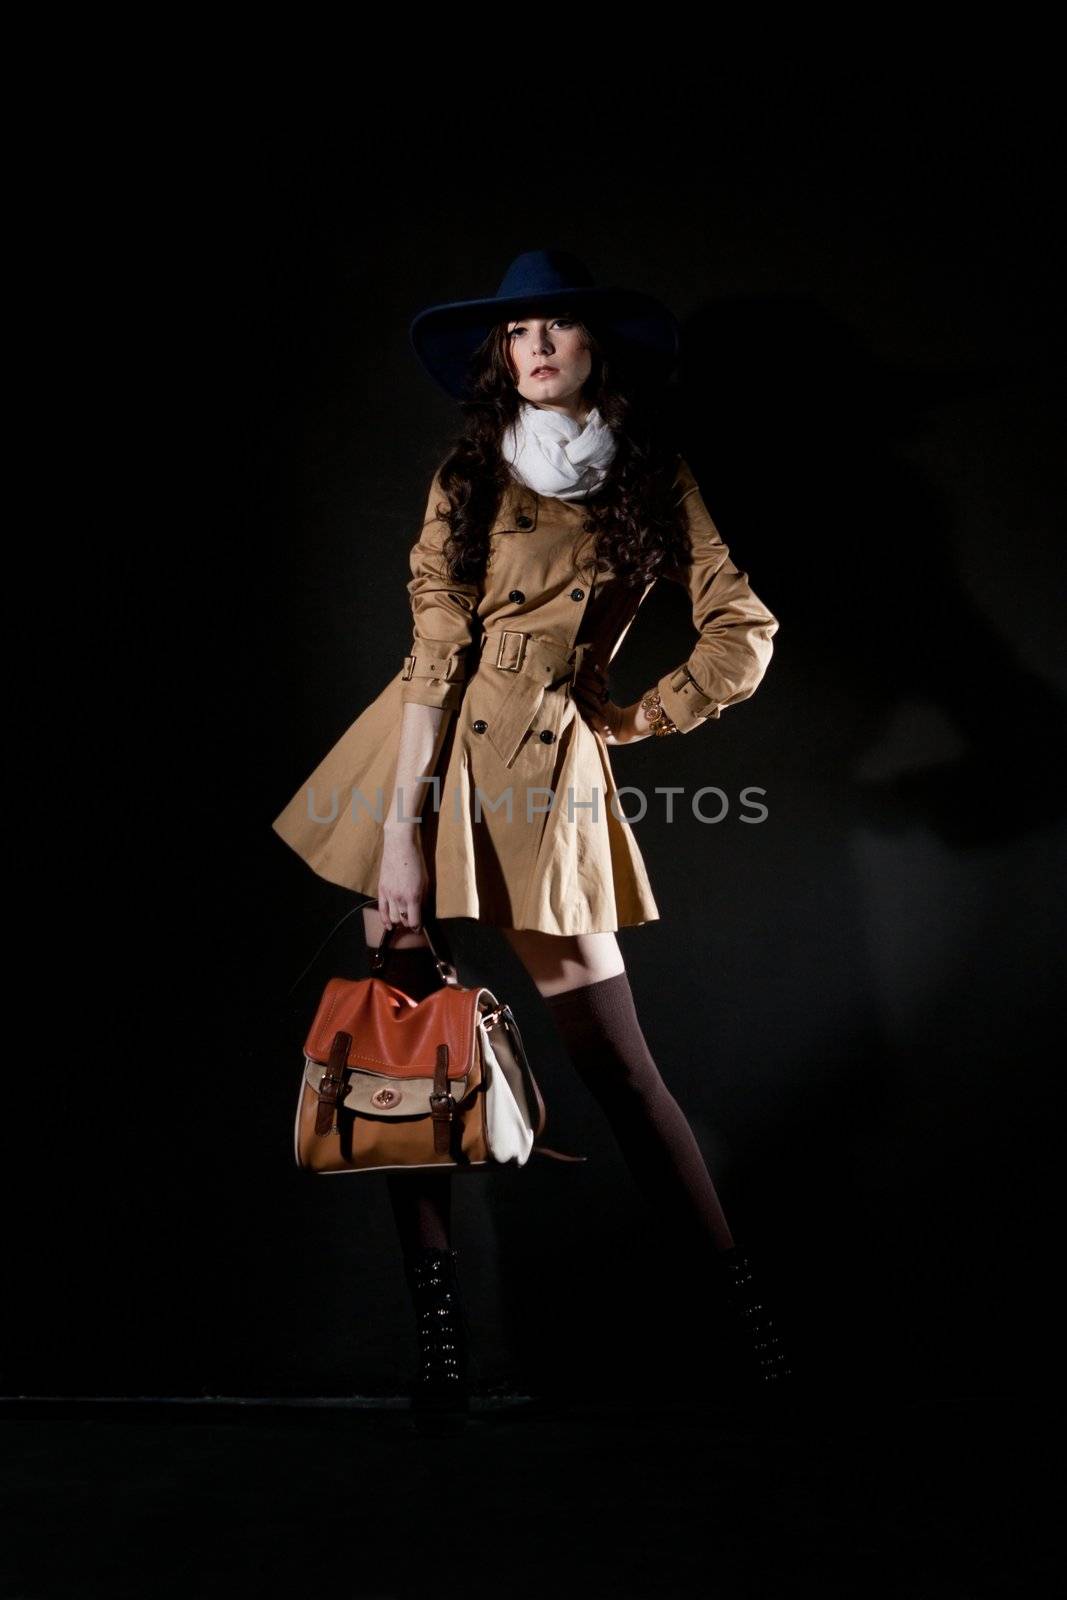 Fashion woman on dark background by nigerfoxy